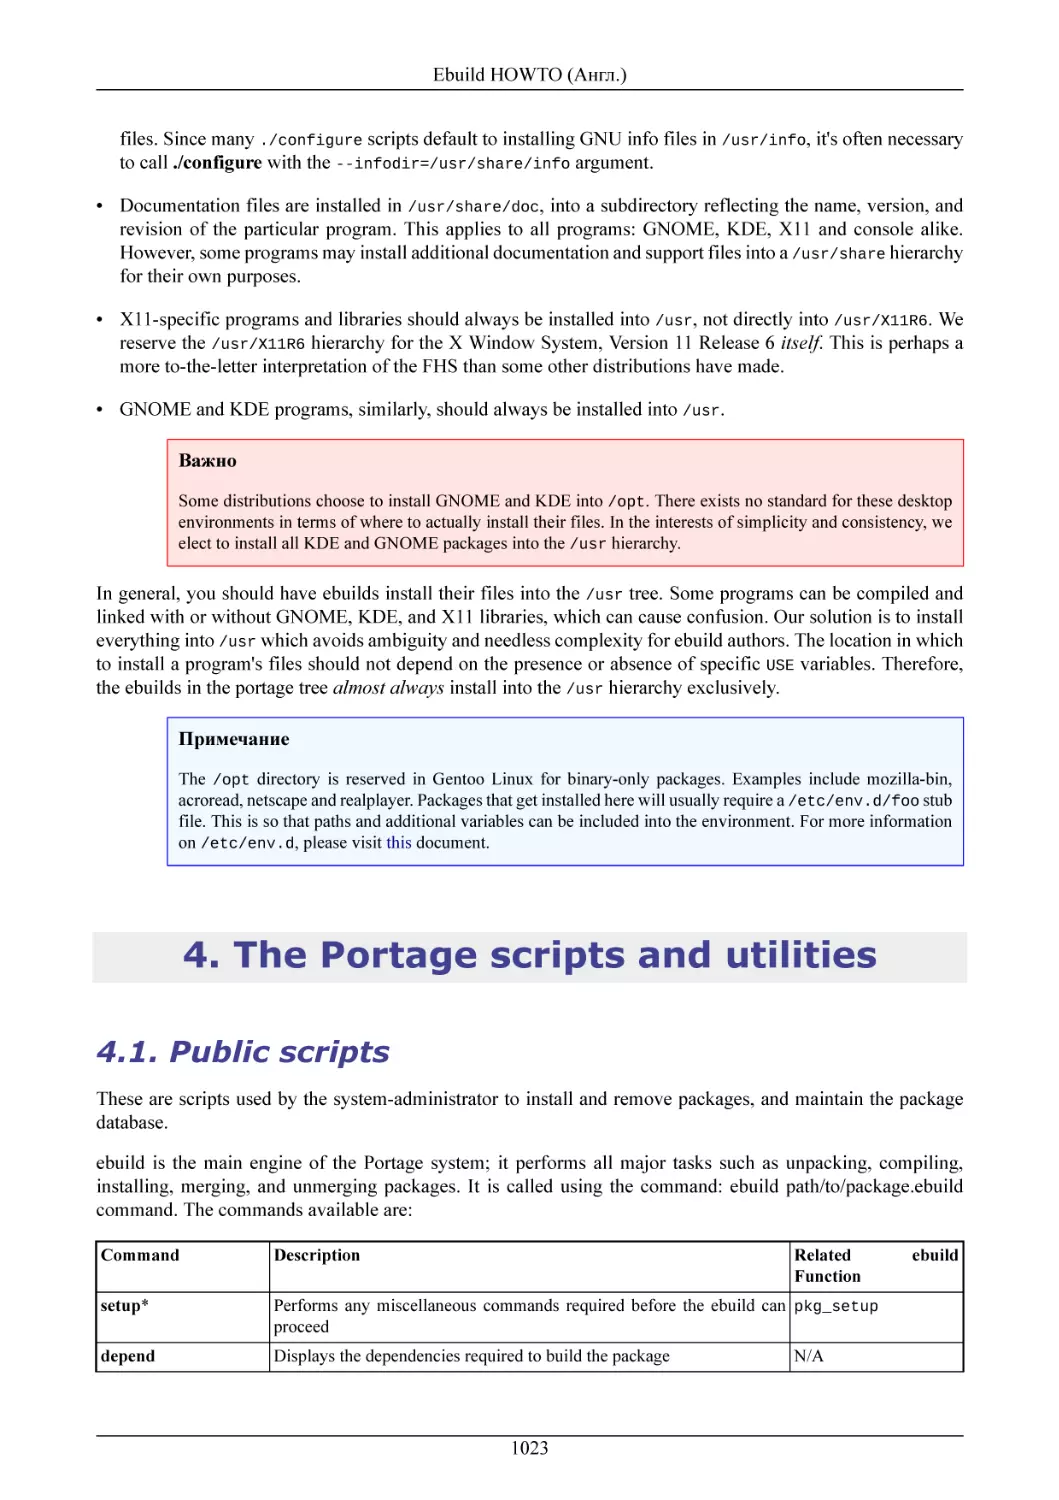 The Portage scripts and utilities
Public scripts